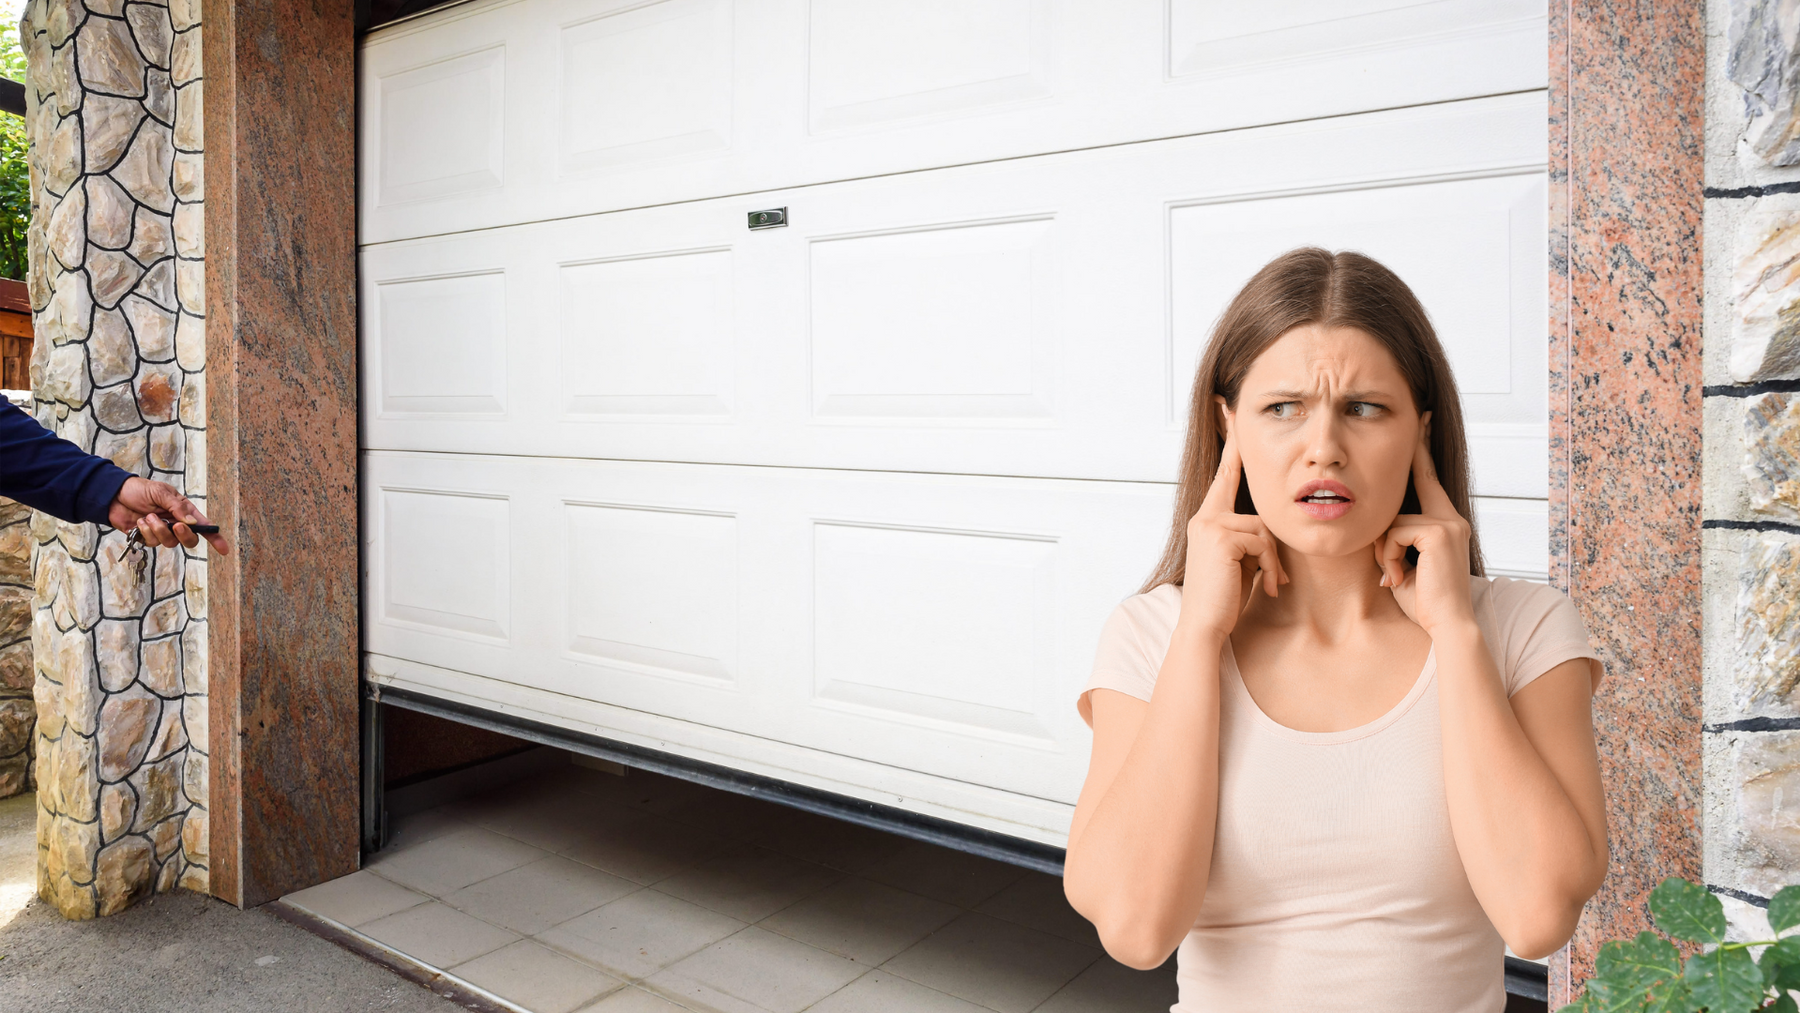 Noisy Garage Door Driving You Crazy? How to Fix it Fast